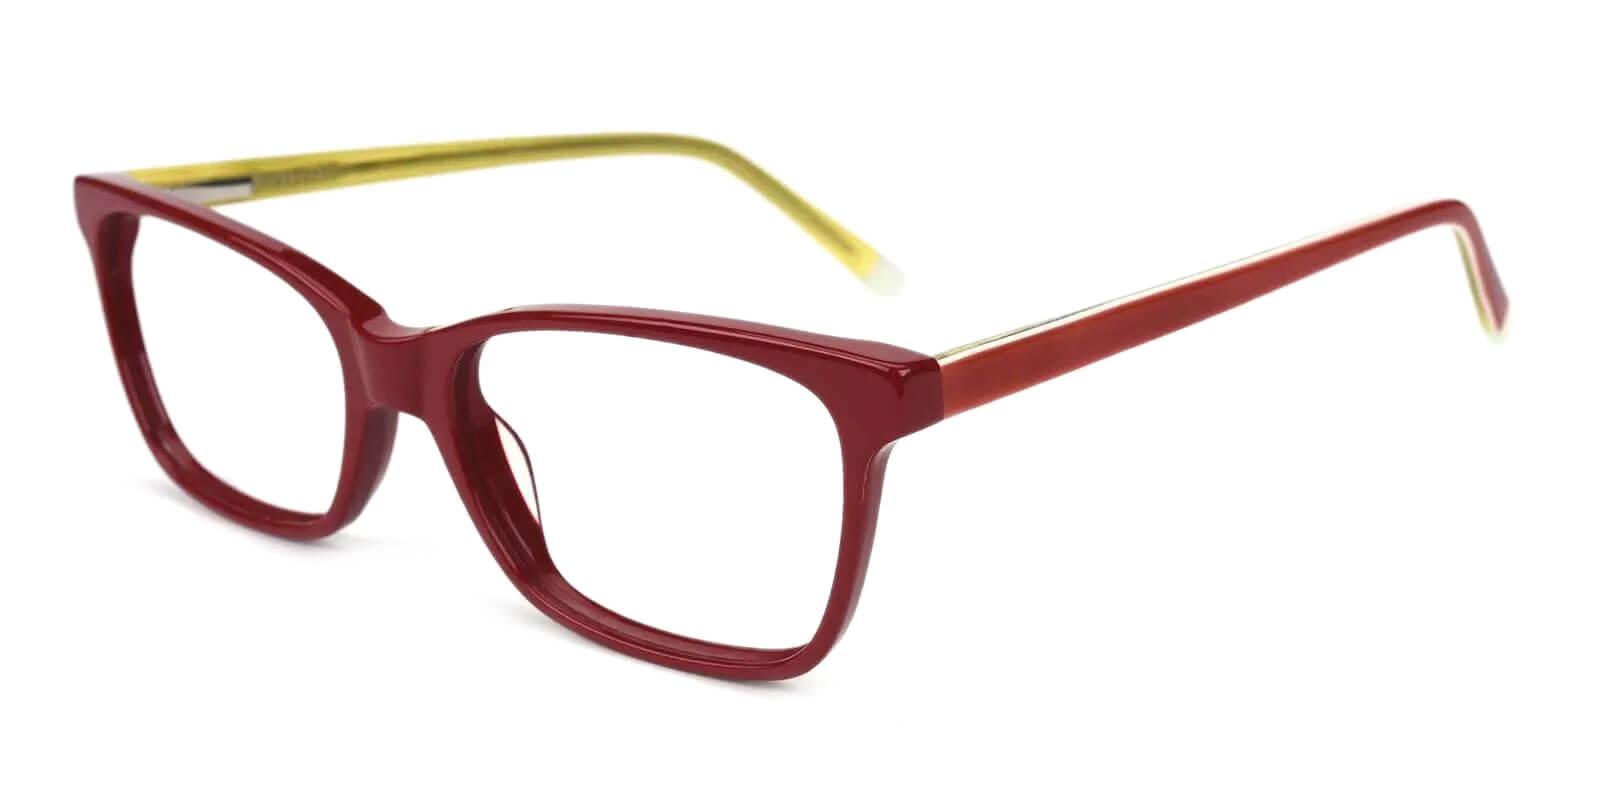 RingGold Yellow Acetate Eyeglasses , SpringHinges , UniversalBridgeFit Frames from ABBE Glasses